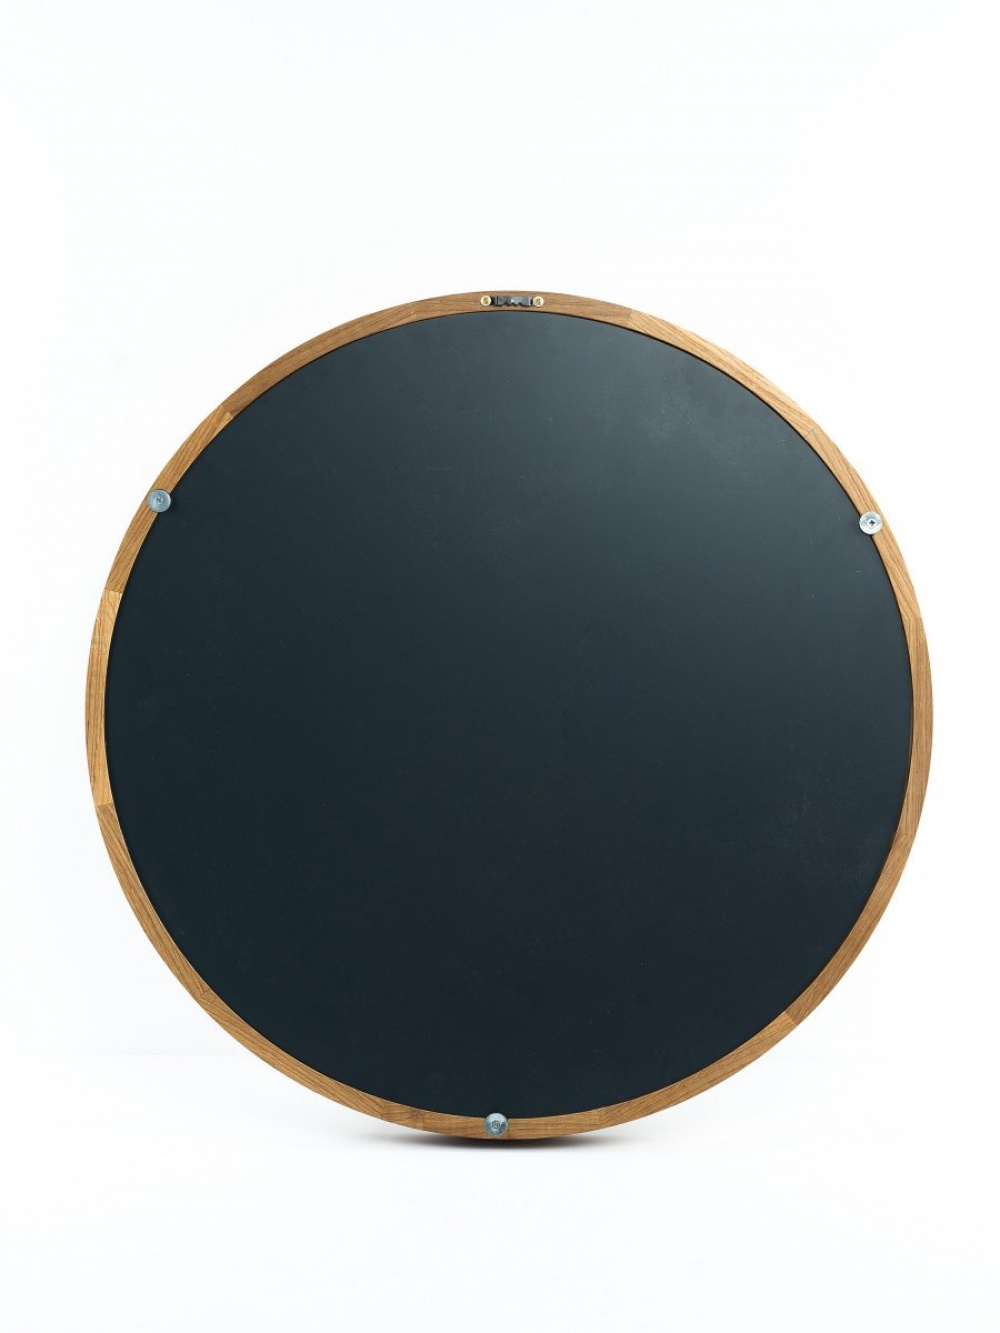 Зеркало интерьерное в круглой раме NEO Premium 600мм